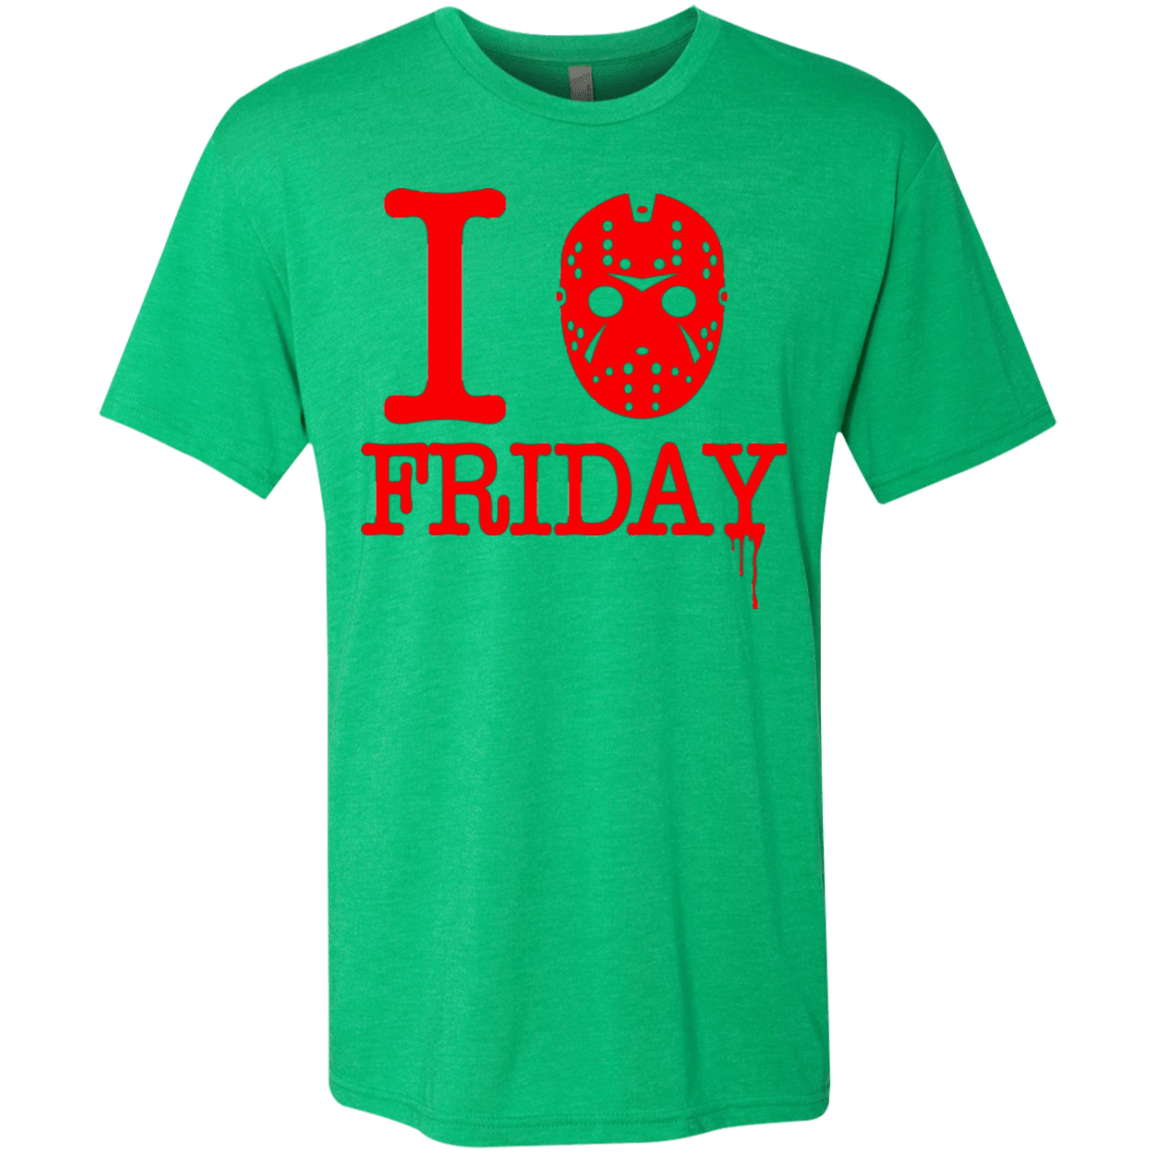 T-Shirts Envy / Small I Love Friday Men's Triblend T-Shirt